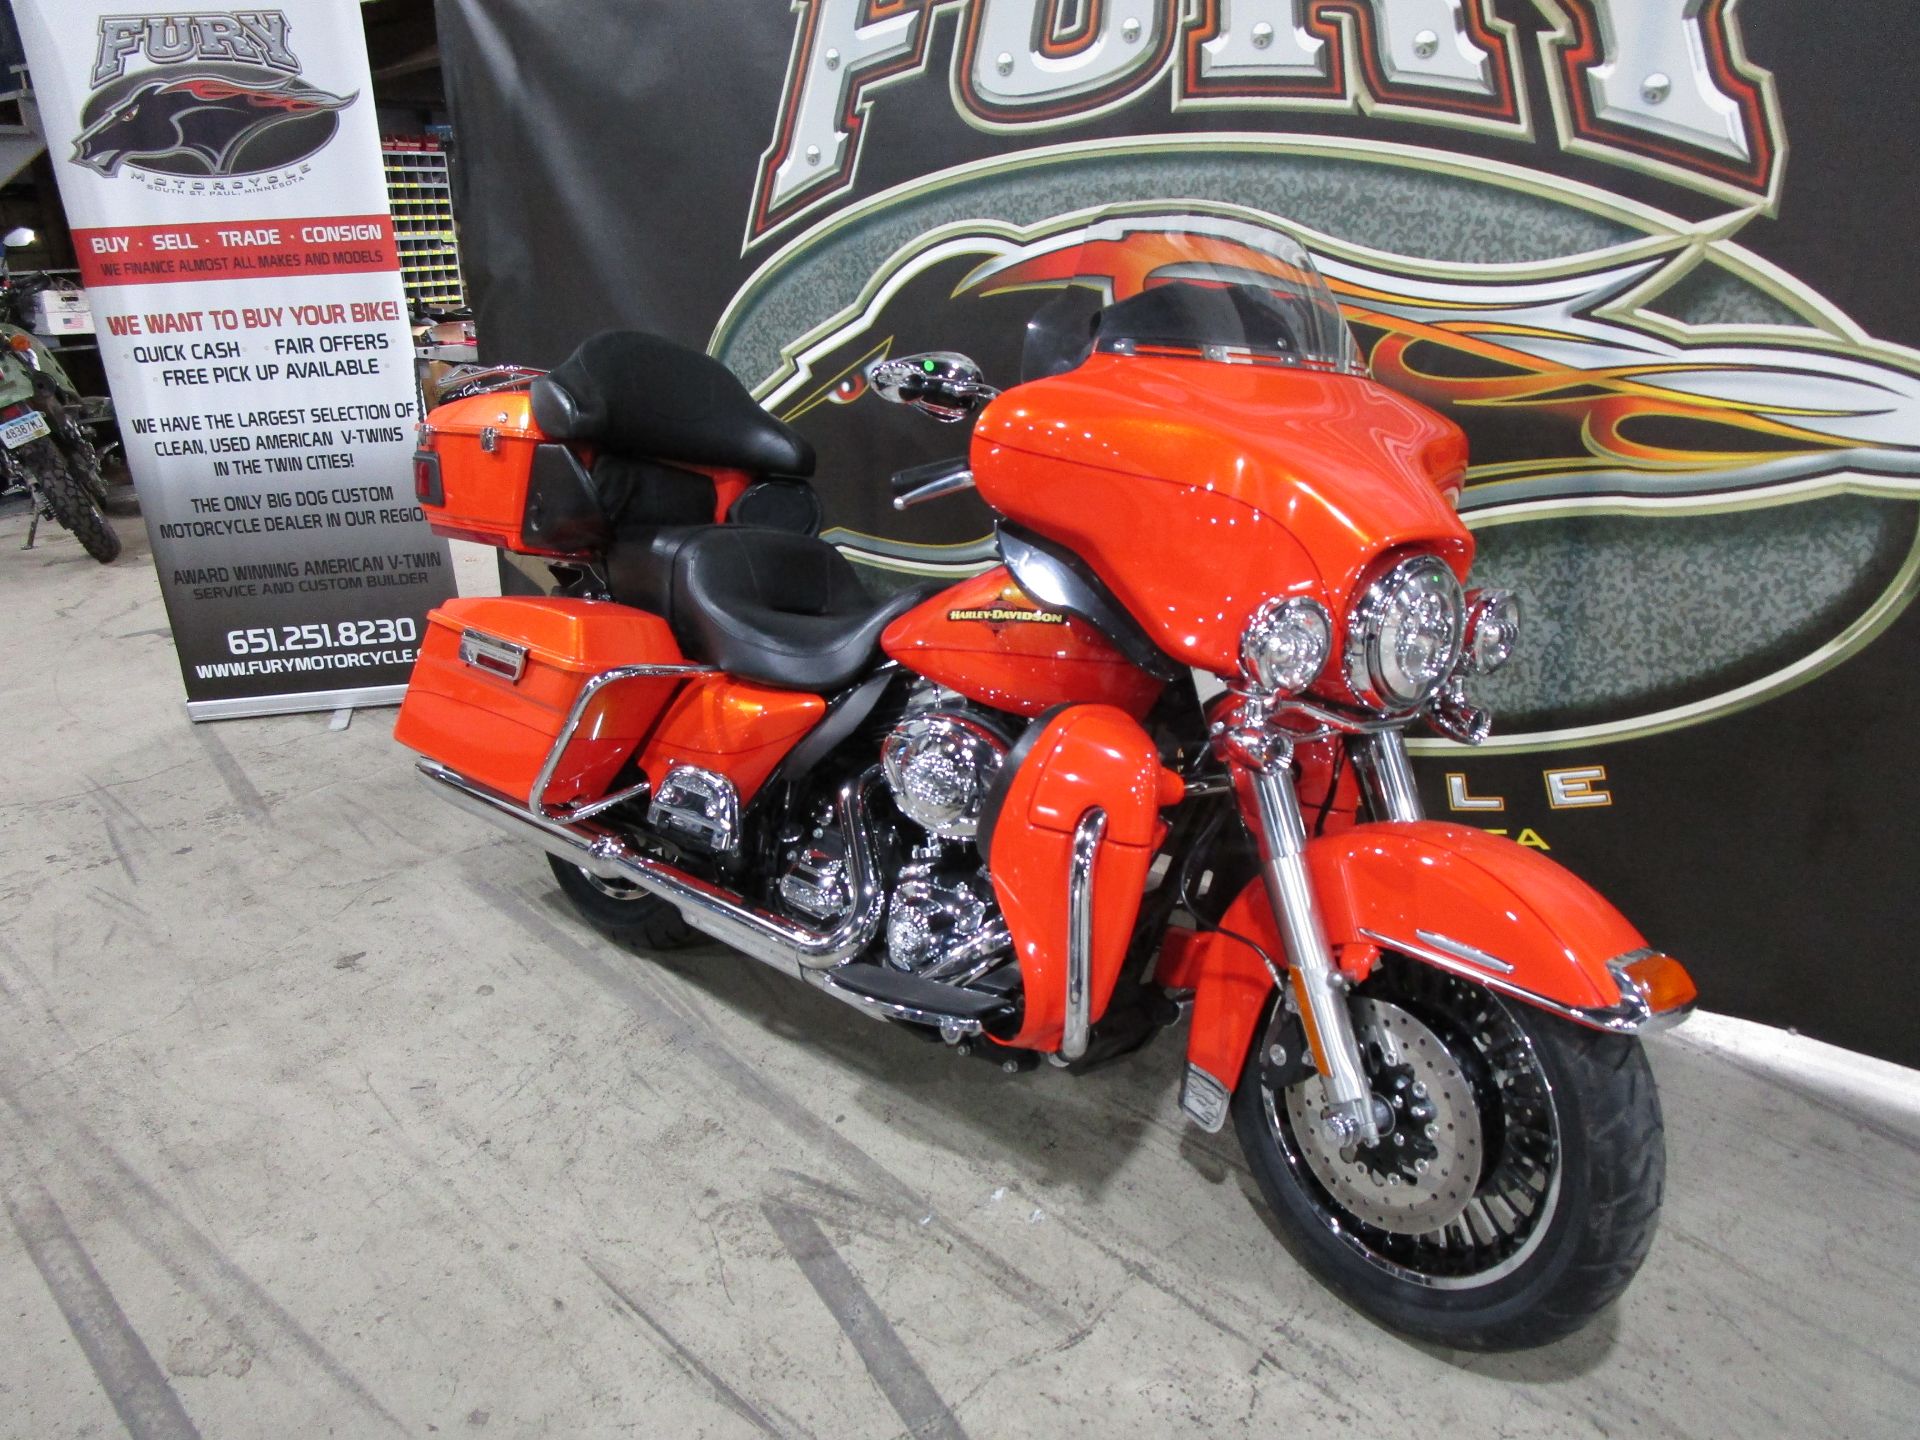 2012 Harley-Davidson Electra Glide® Ultra Limited in South Saint Paul, Minnesota - Photo 3